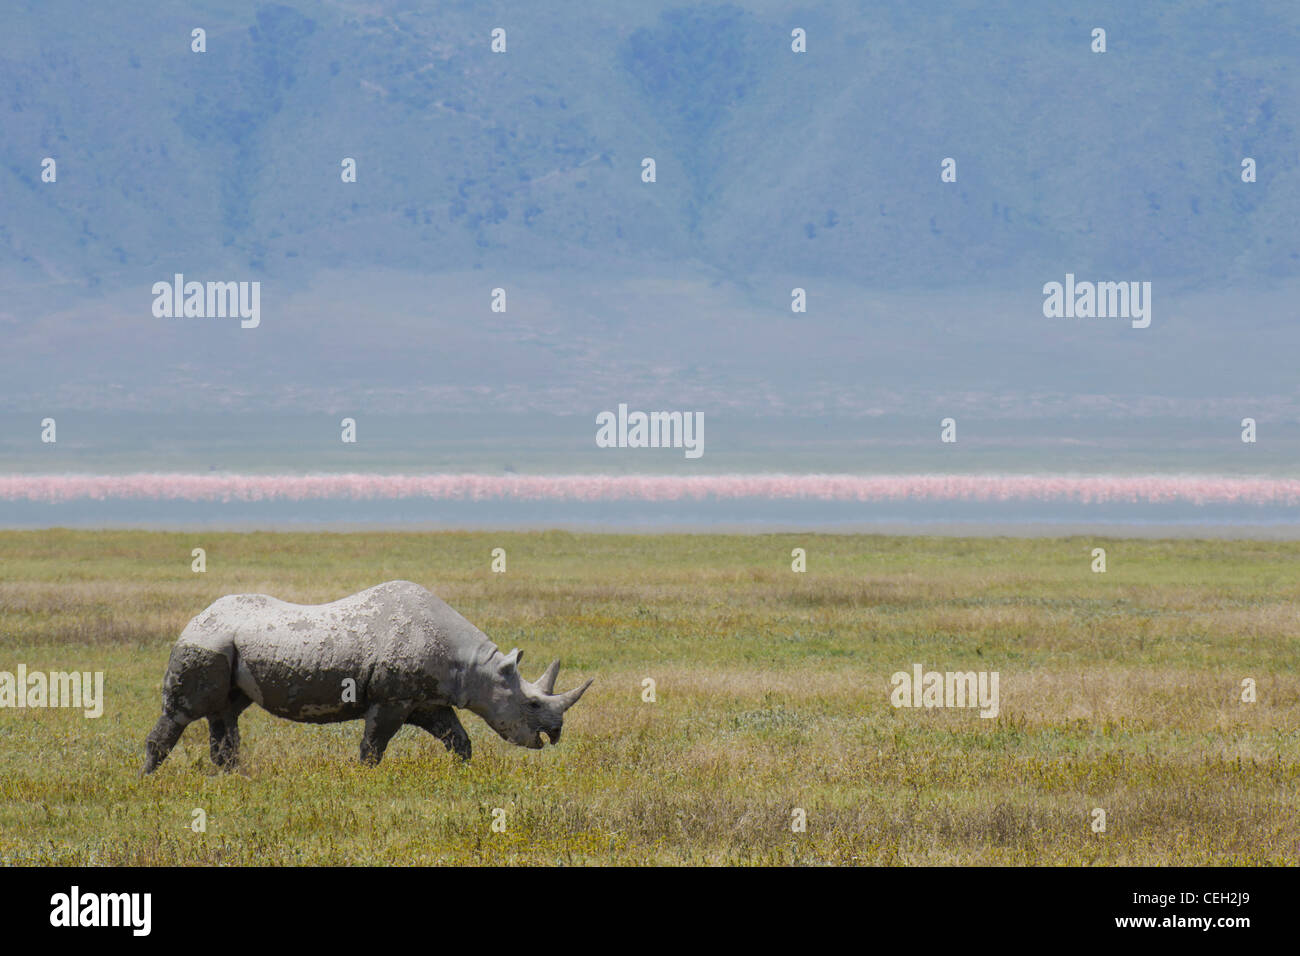 Black Rhinoceros or Hook-lipped Rhinoceros in an open field (Diceros bicornis). Stock Photo